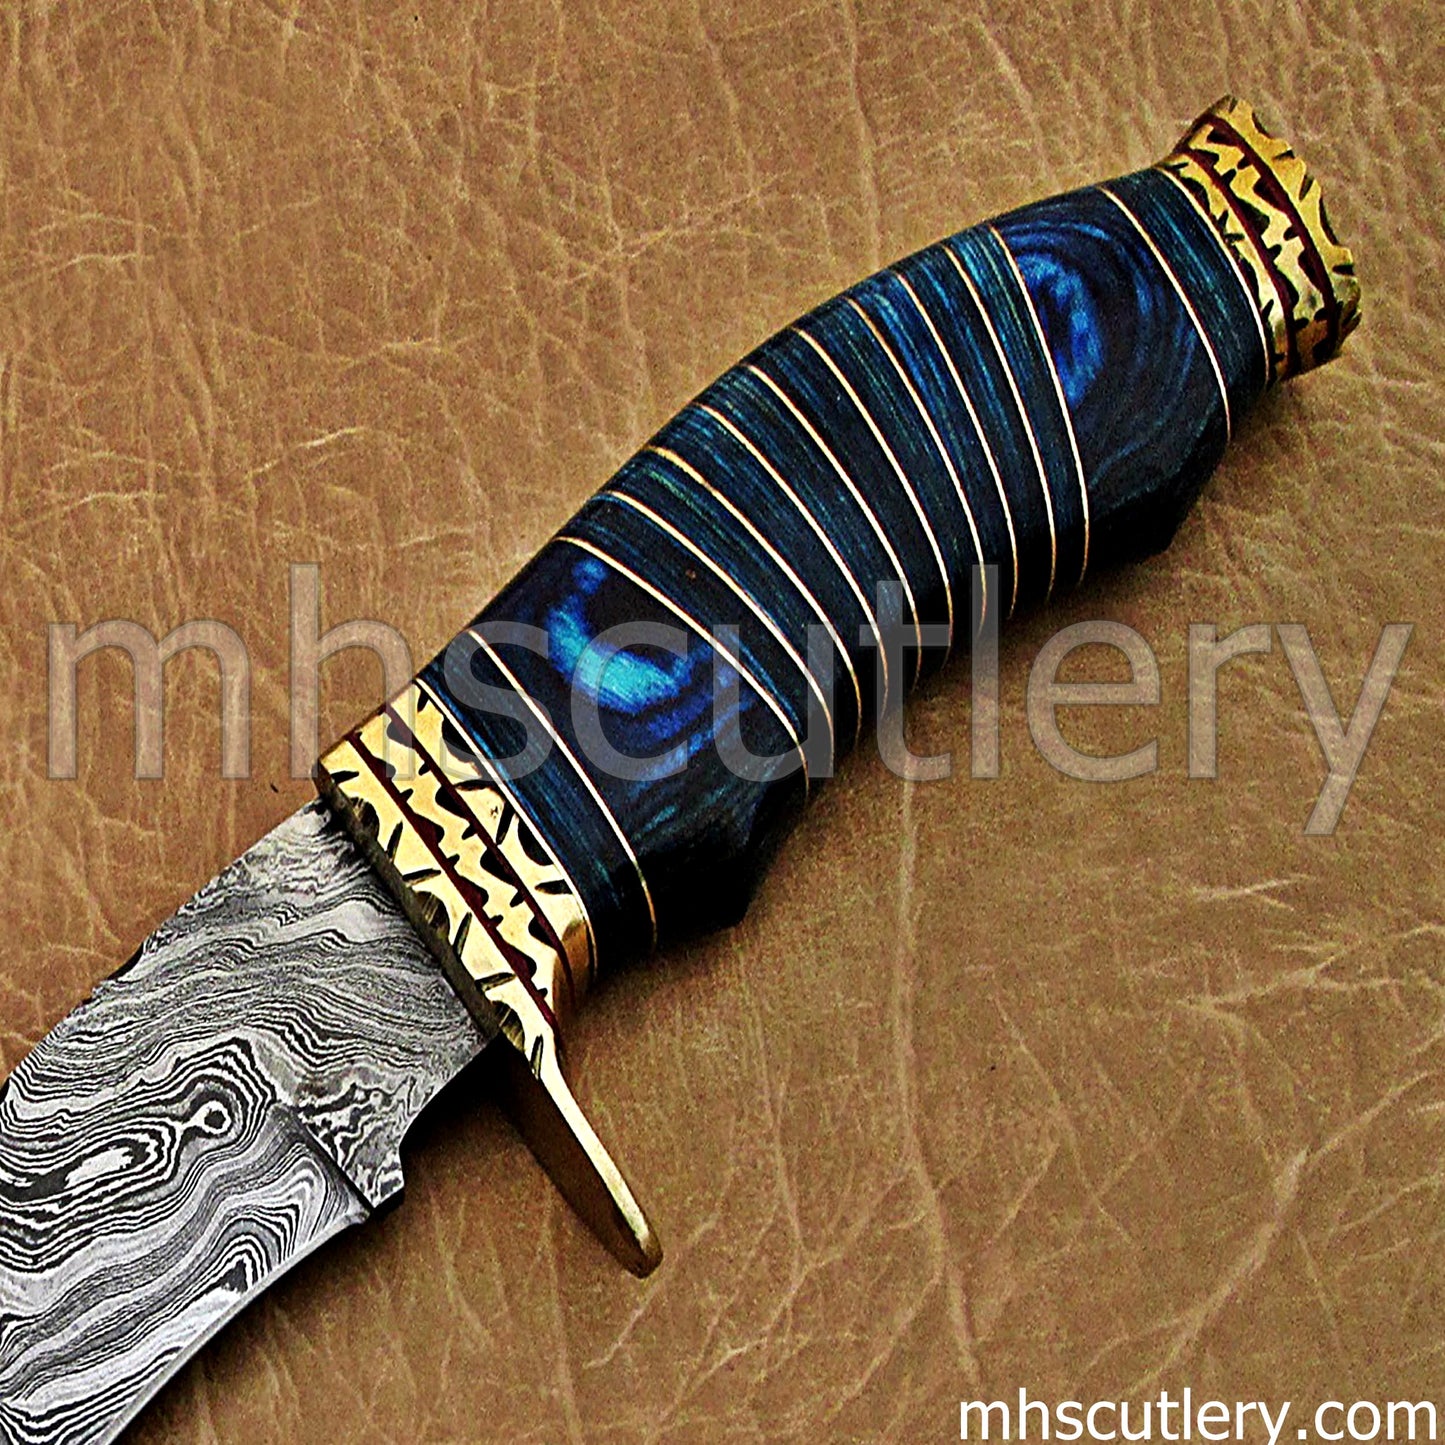 Hand Forged Damascus Steel Bushcraft Machete Knife | mhscutlery